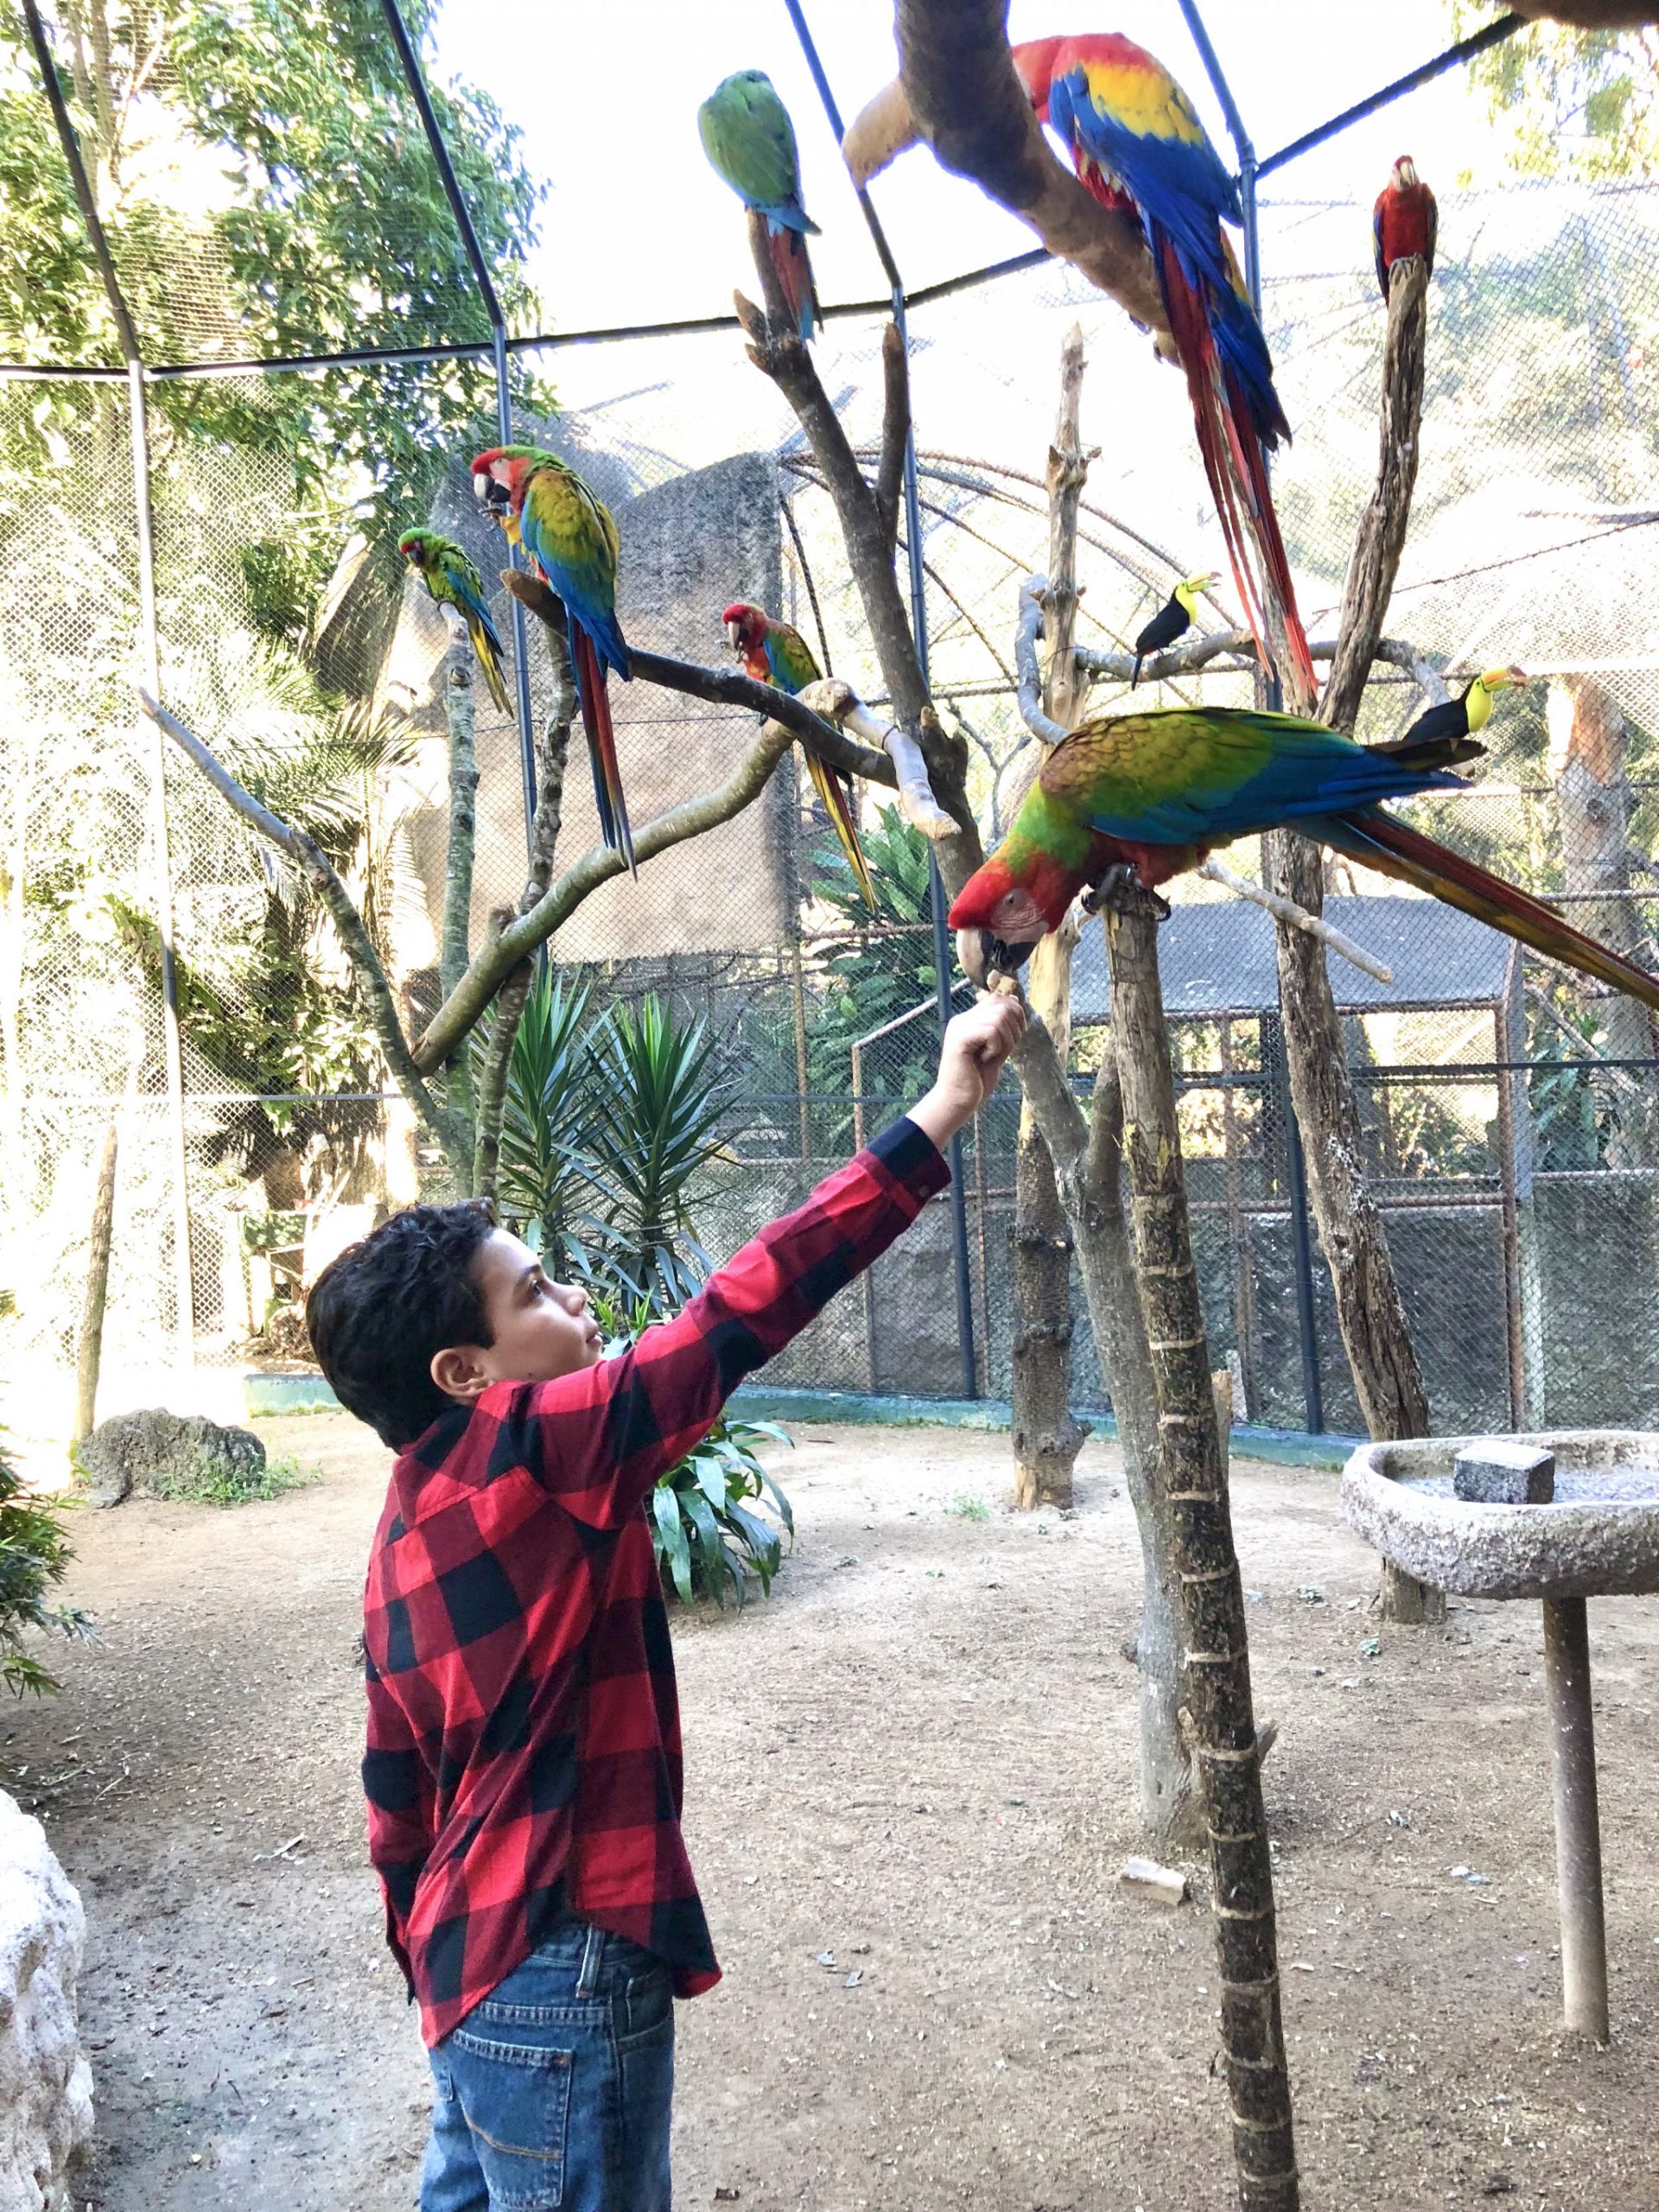 Feeding the macaws at La Aurora Zoo